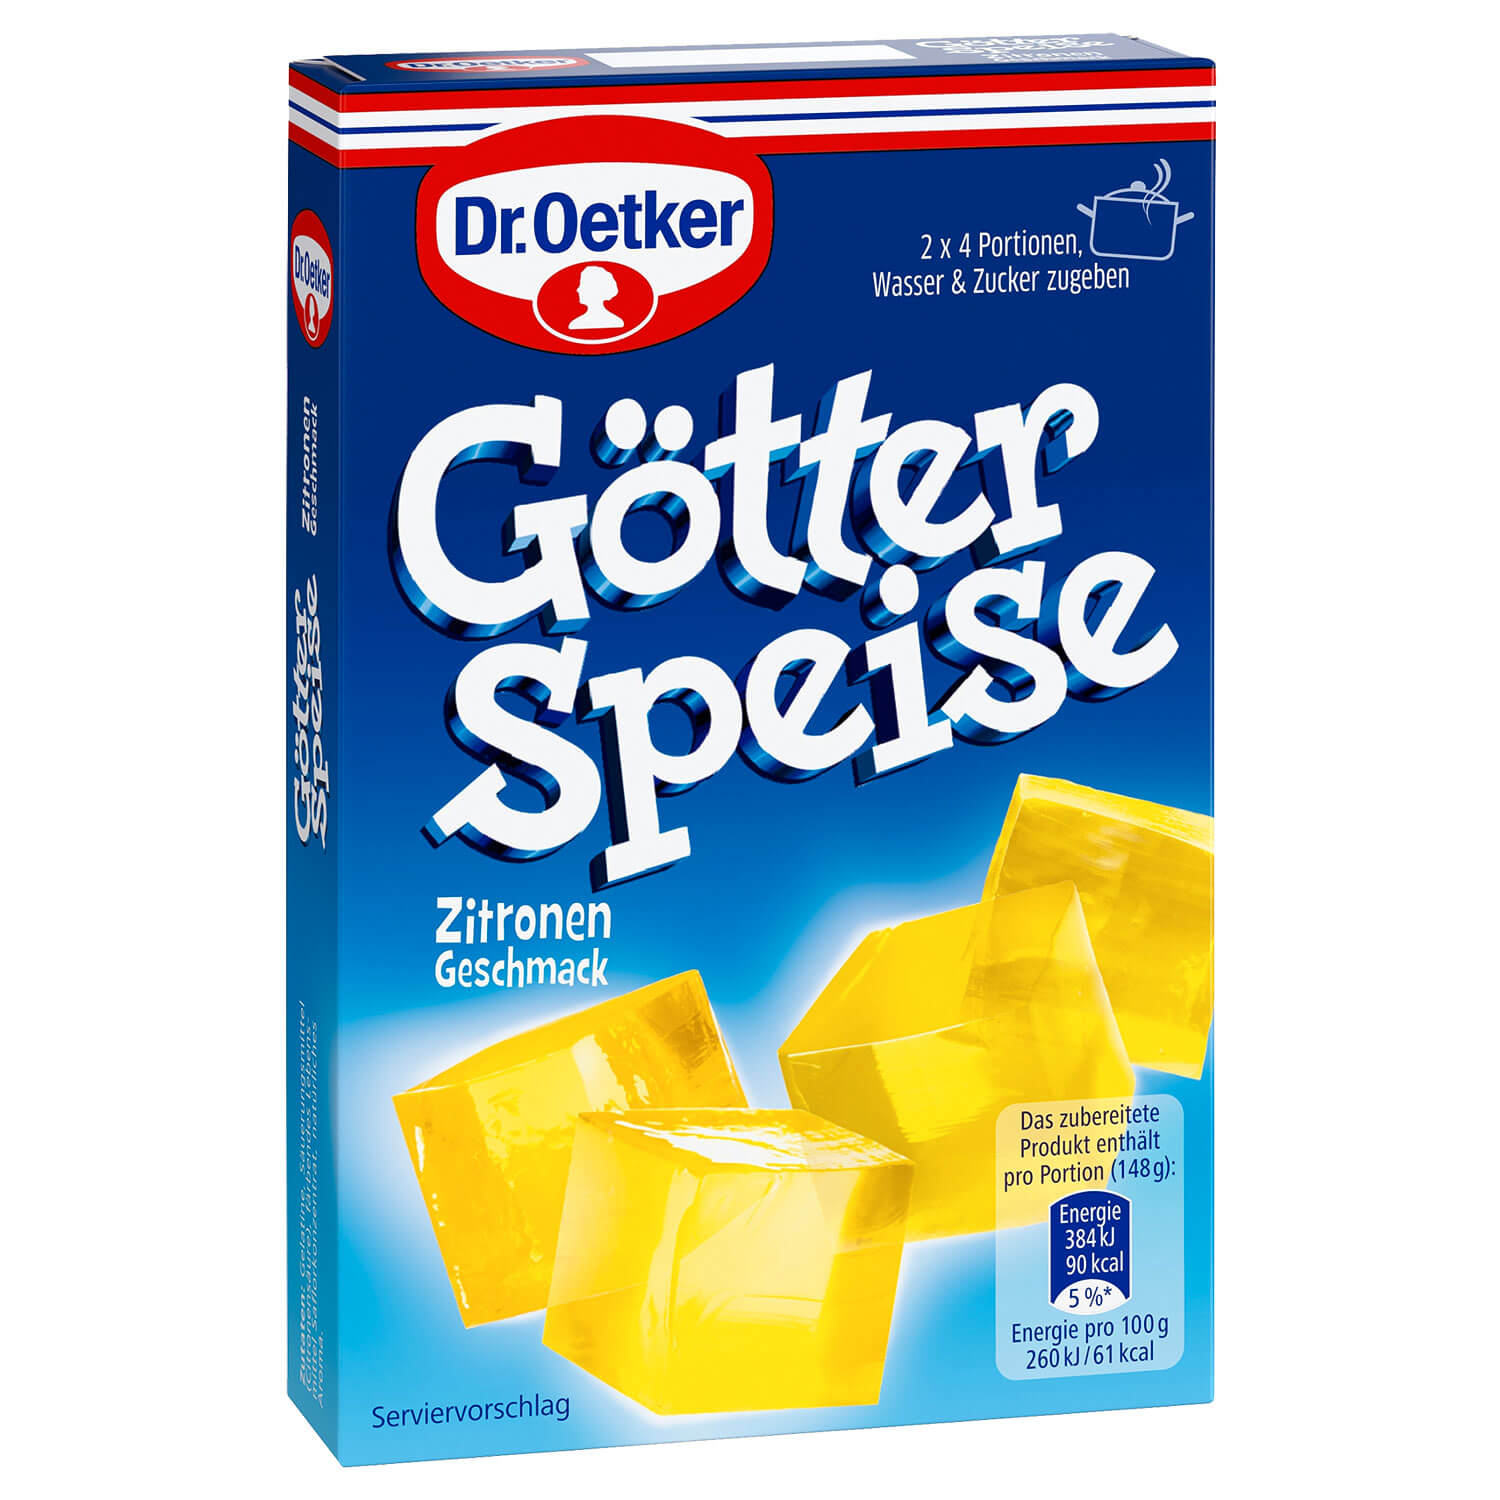 Dr. Oetker Götterspeise Zitronen-Geschmack 2x4 Portionen Packung